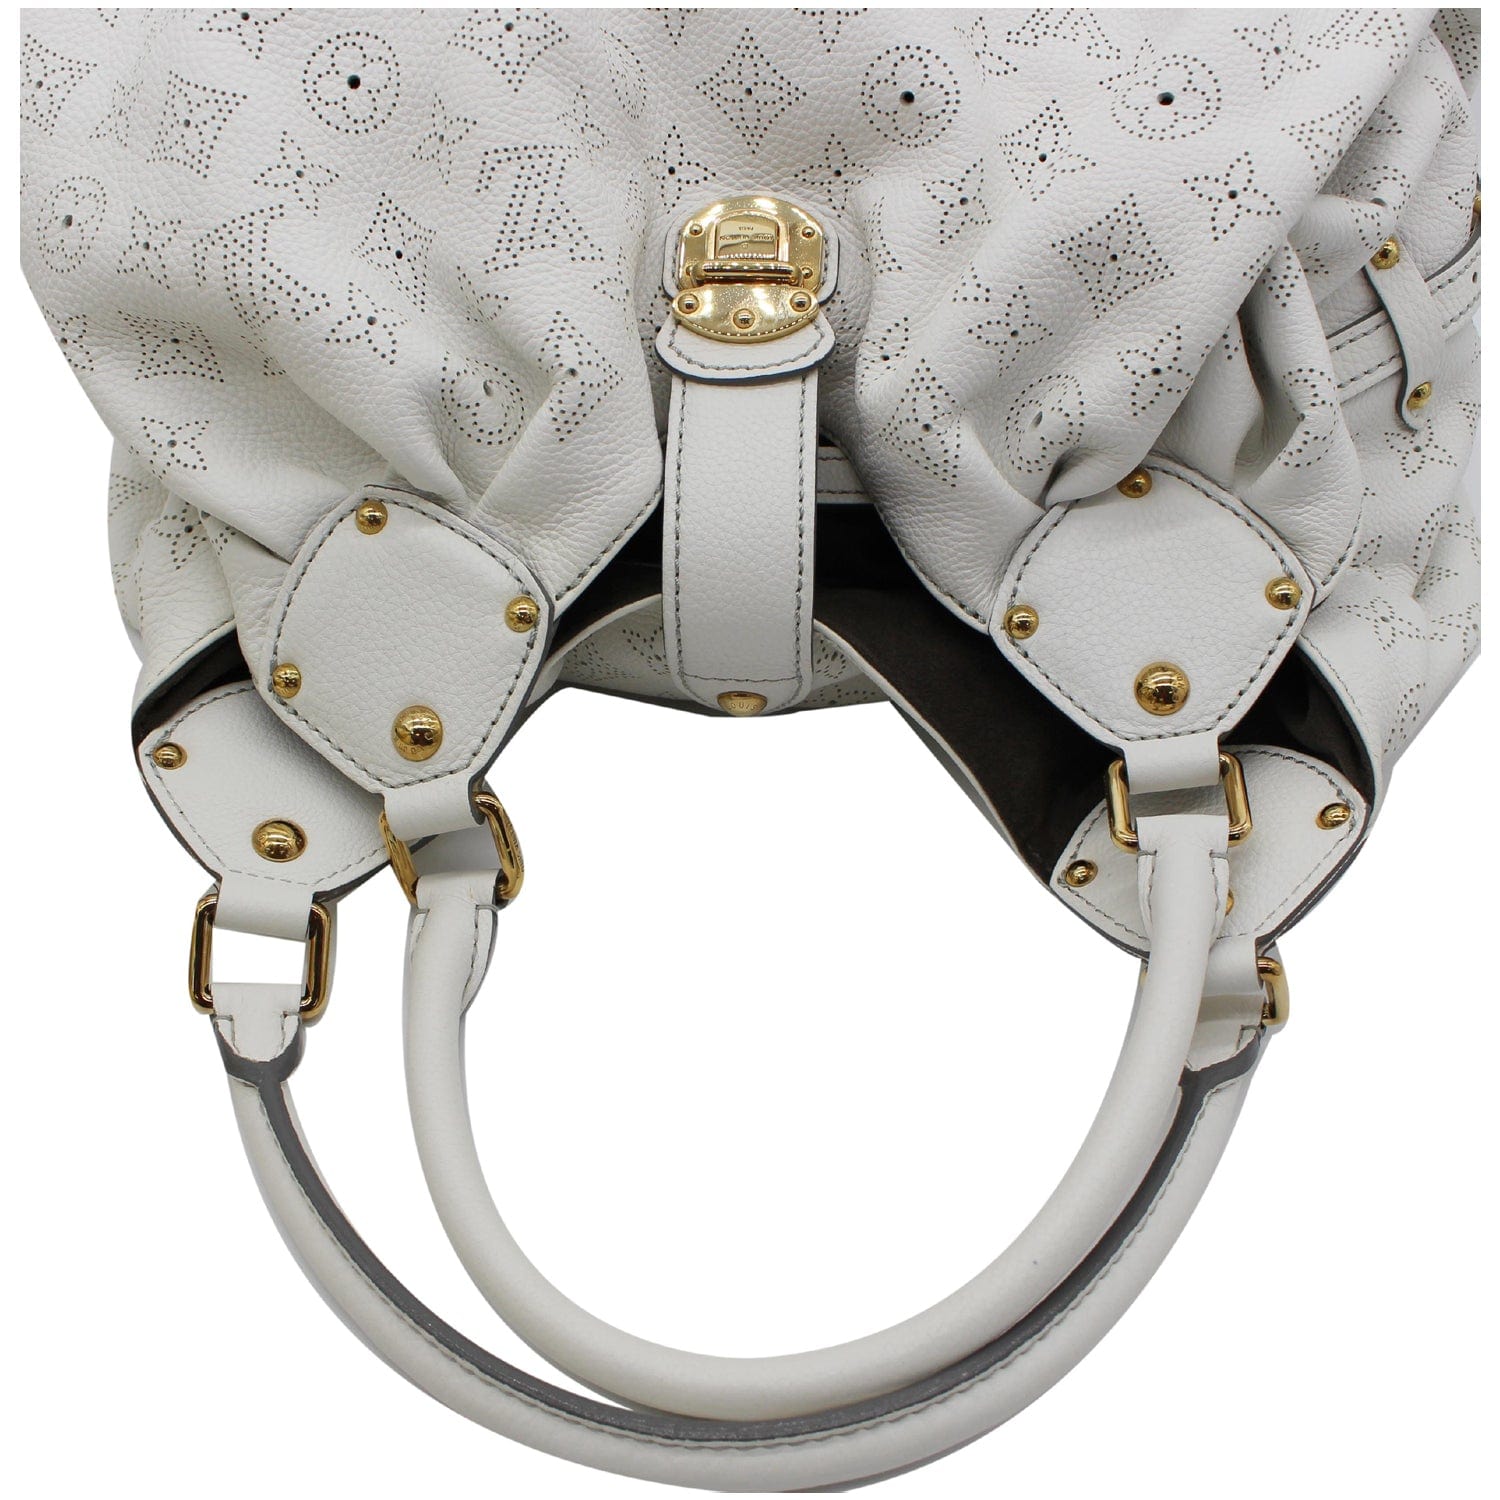 Louis Vuitton White Mahina Leather Xl Hobo